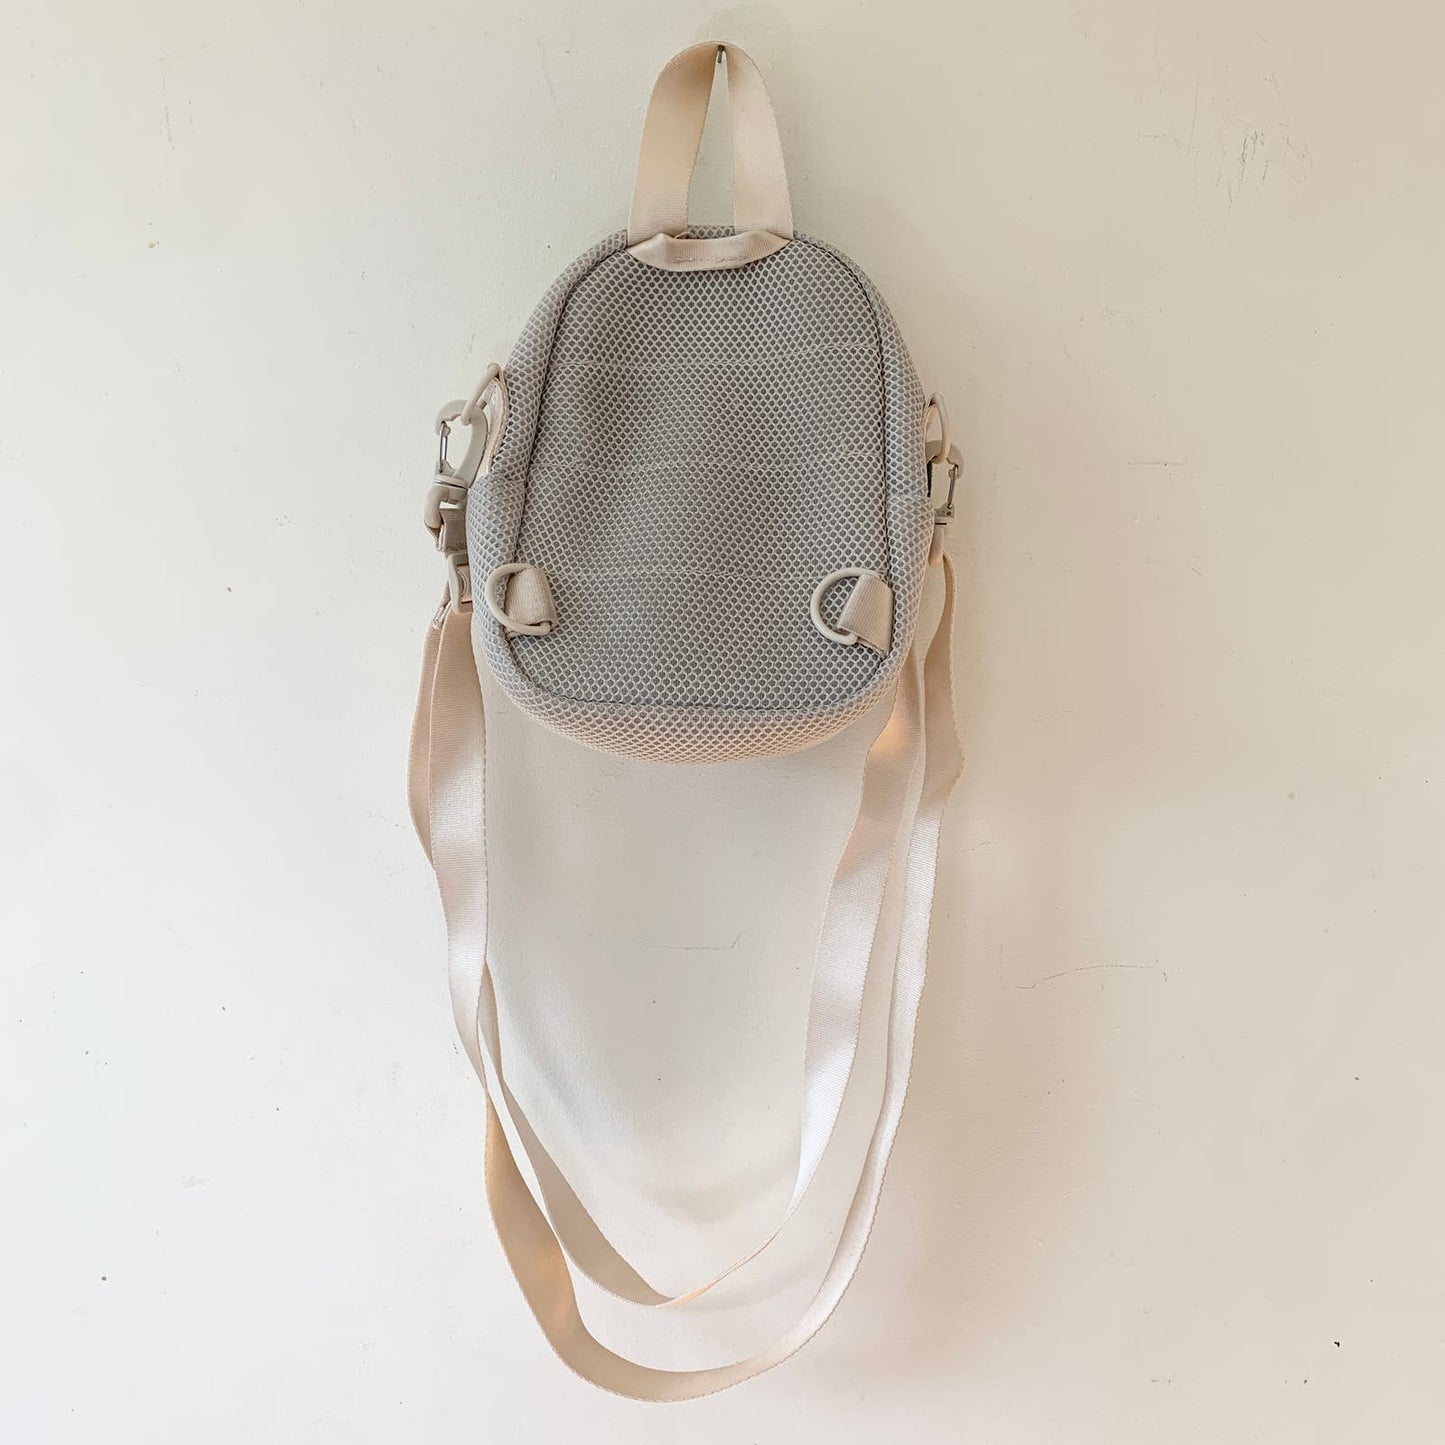 ADIDAS Airmesh Convertible Mini Backpack Crossbody Bag Beige